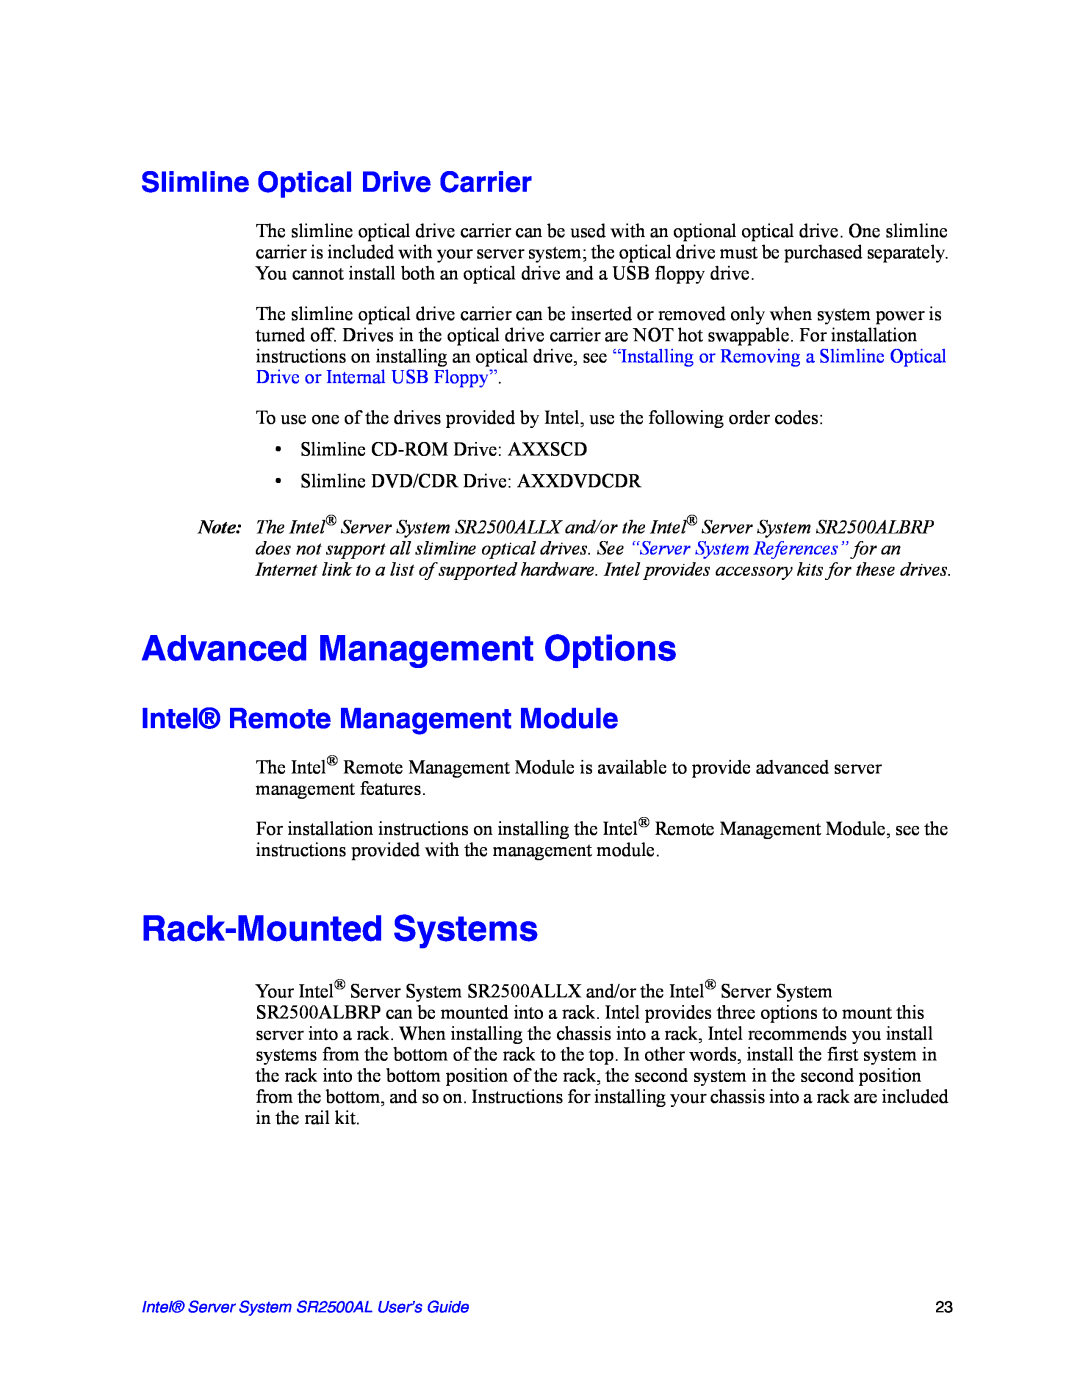 Intel SR2500AL manual Advanced Management Options, Rack-Mounted Systems, Slimline Optical Drive Carrier 